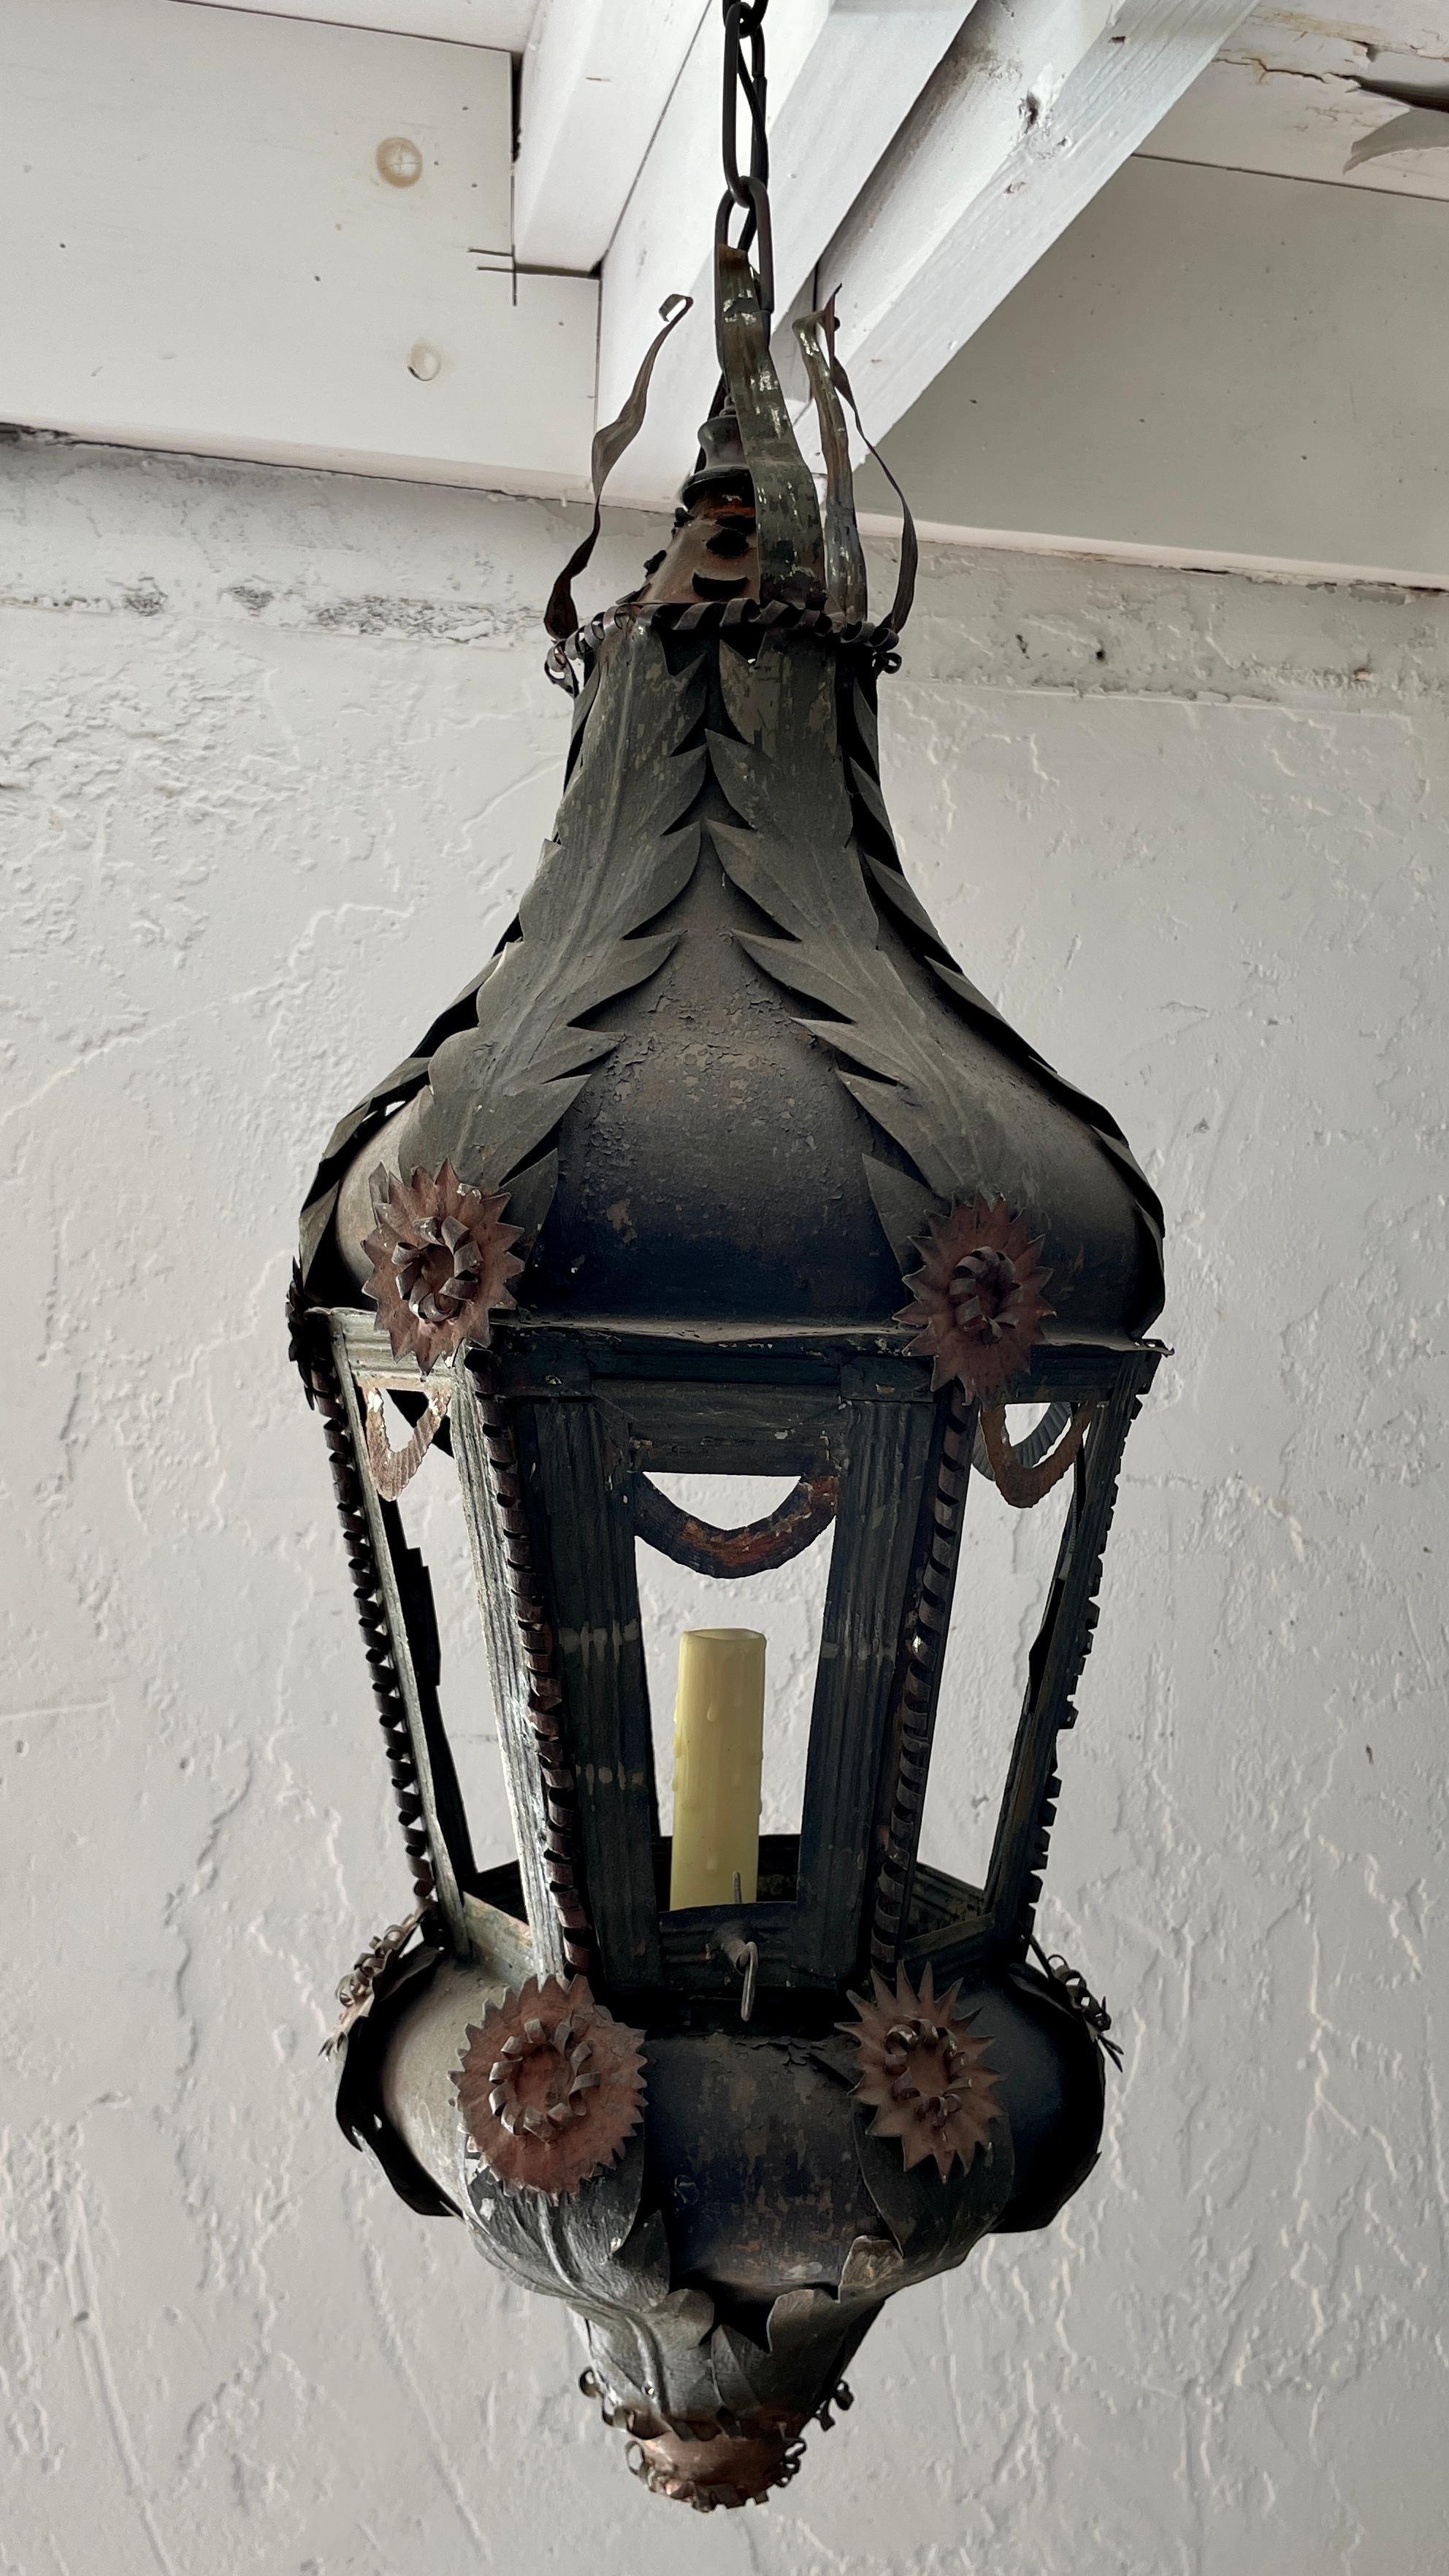 Classic vintage Addison Mizner designed ceiling lantern. Great carving side and flower details.